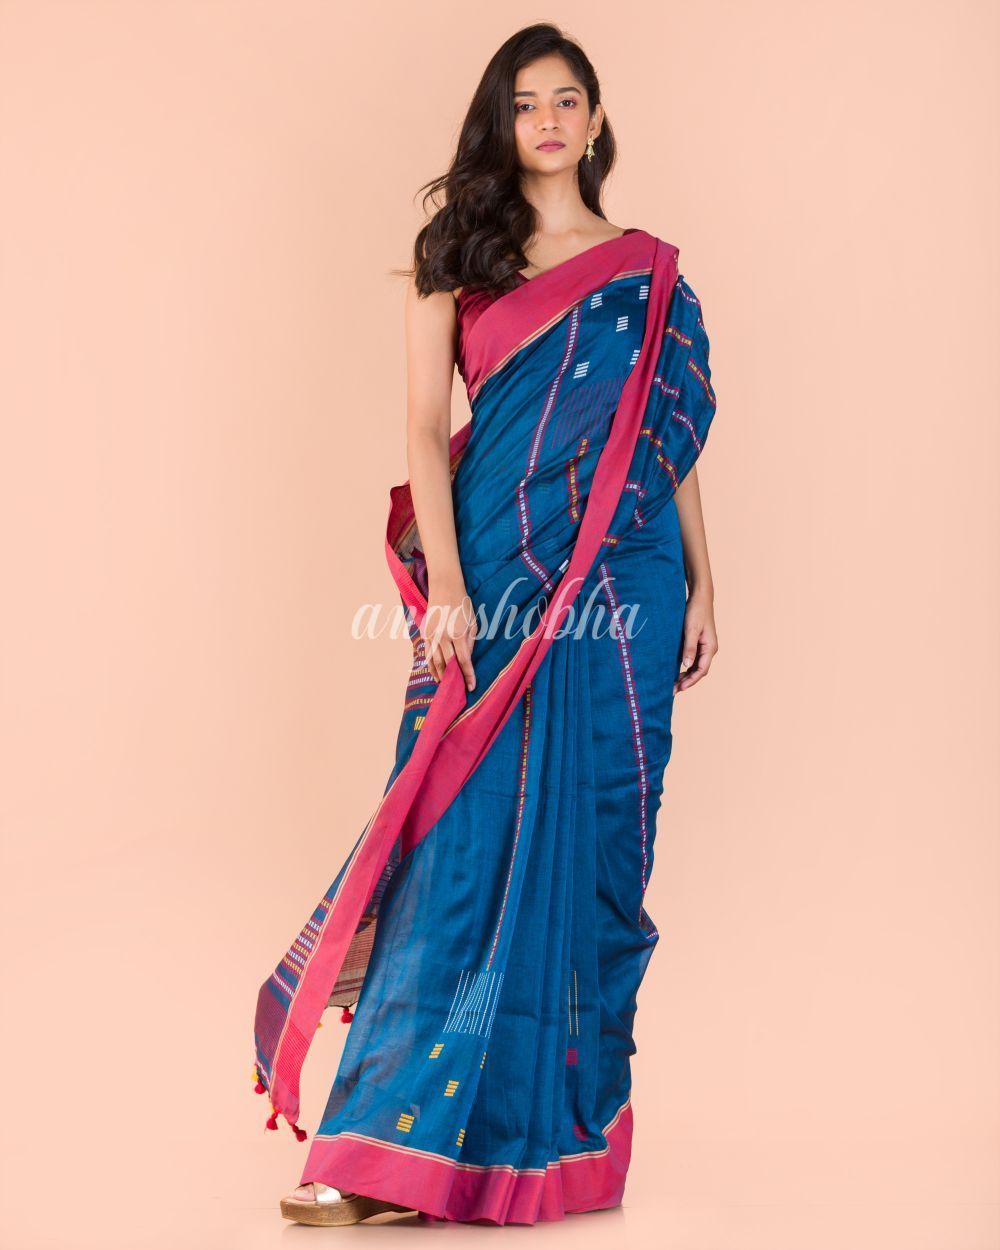 Women's Blue Cotton Jamdani Saree - Angoshobha